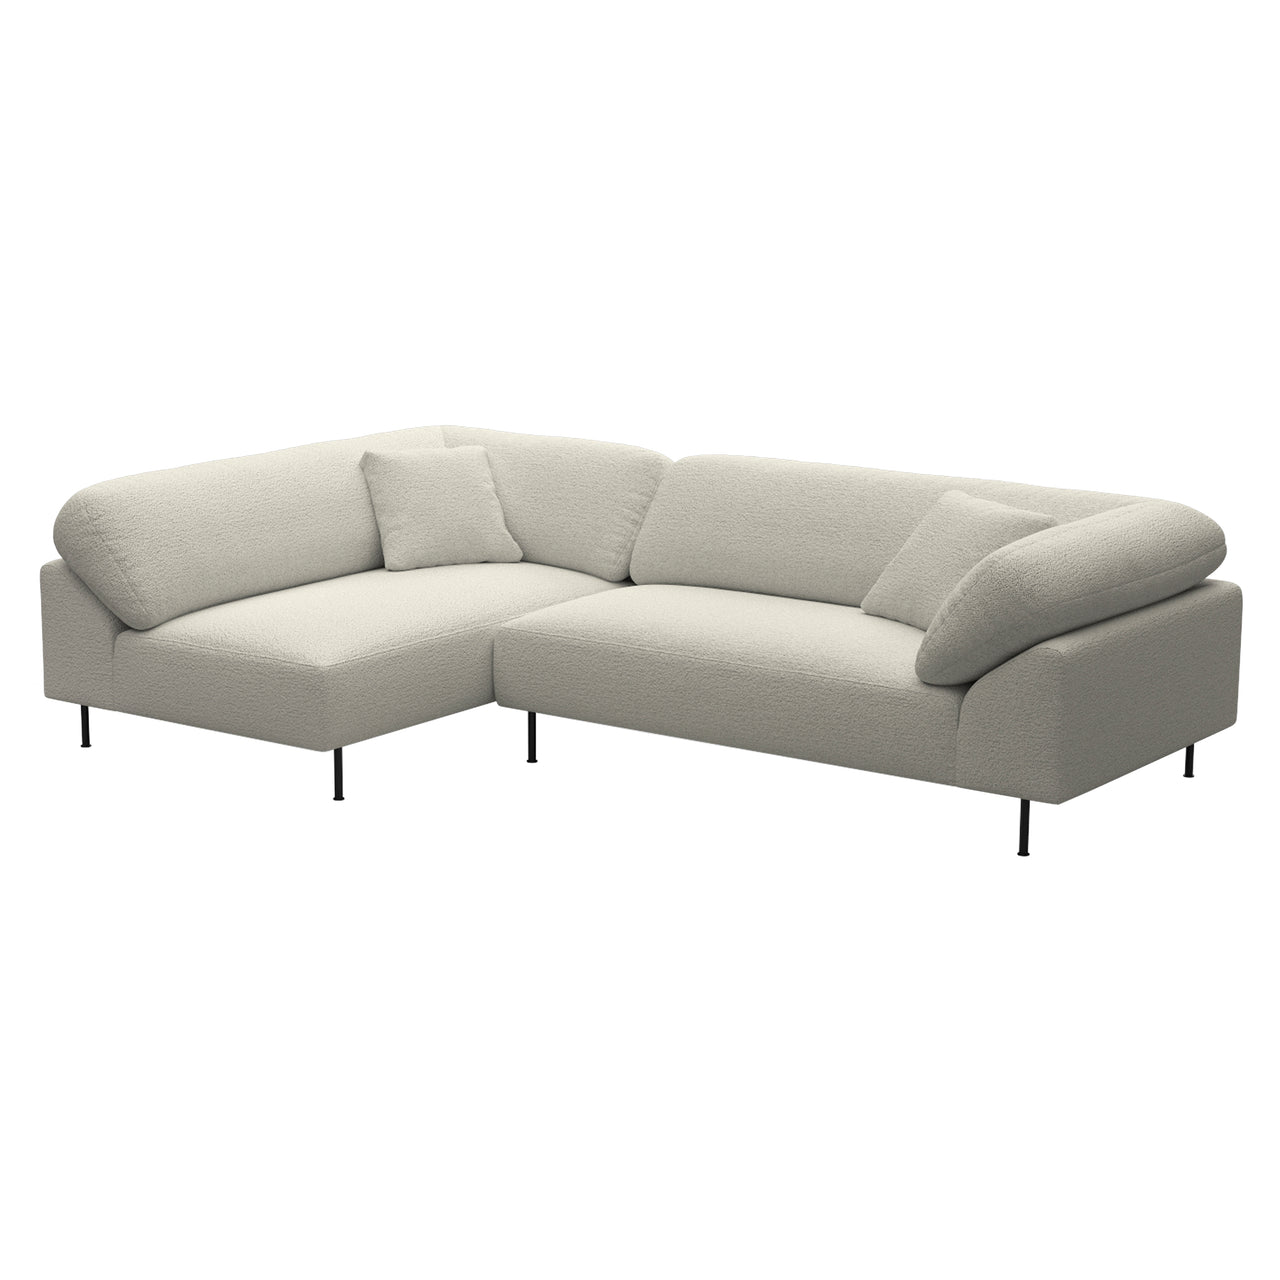 Collar Sectional Sofa: Configuration 1